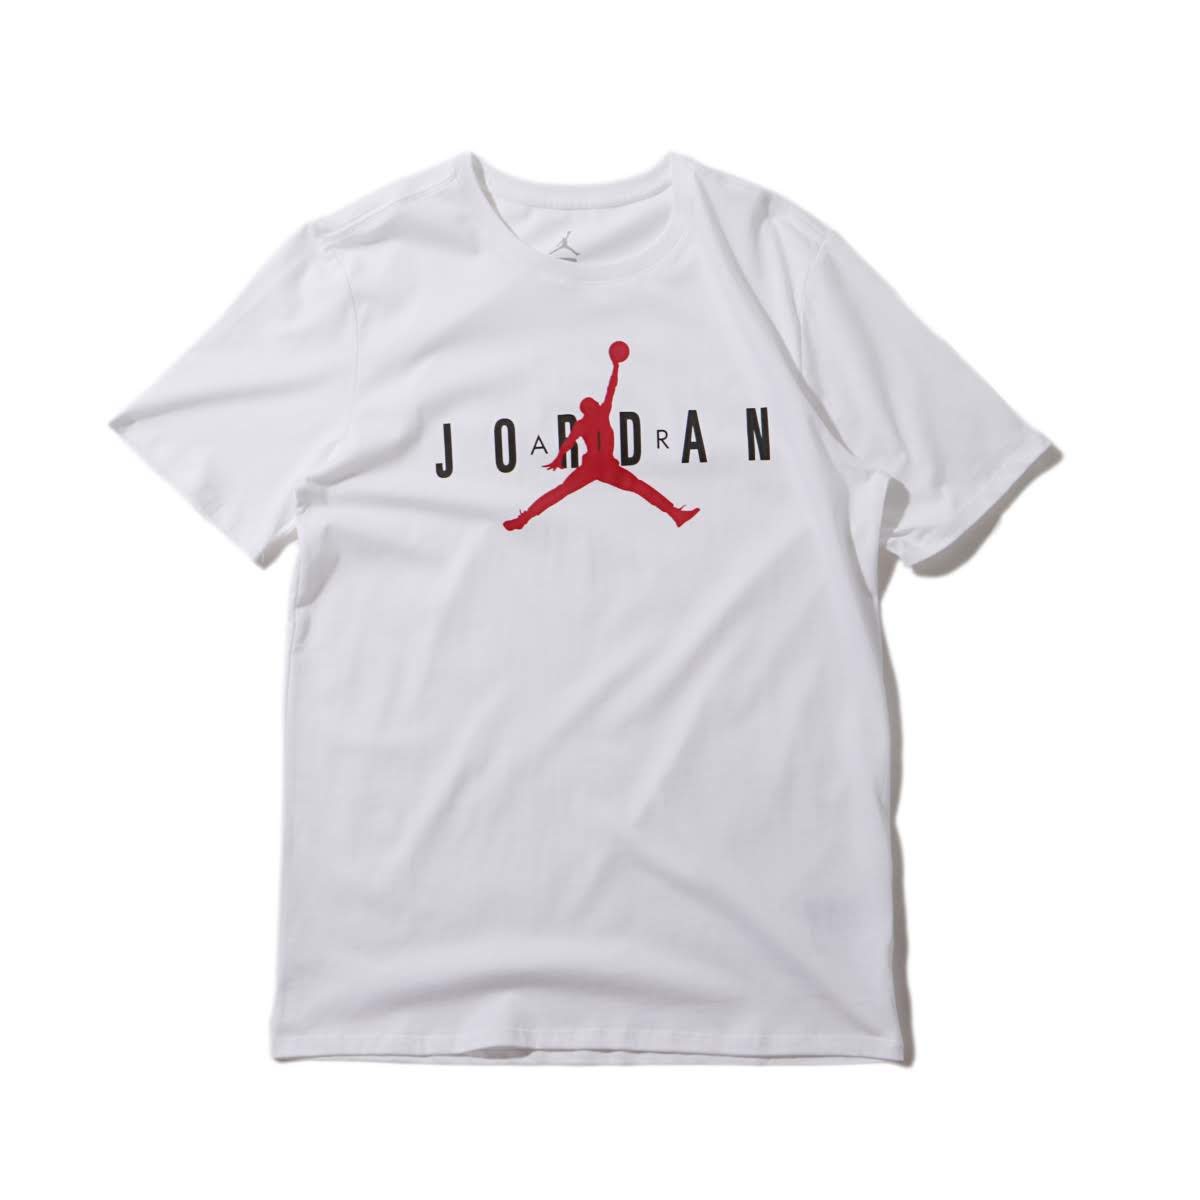 white and red jordan shirt online -